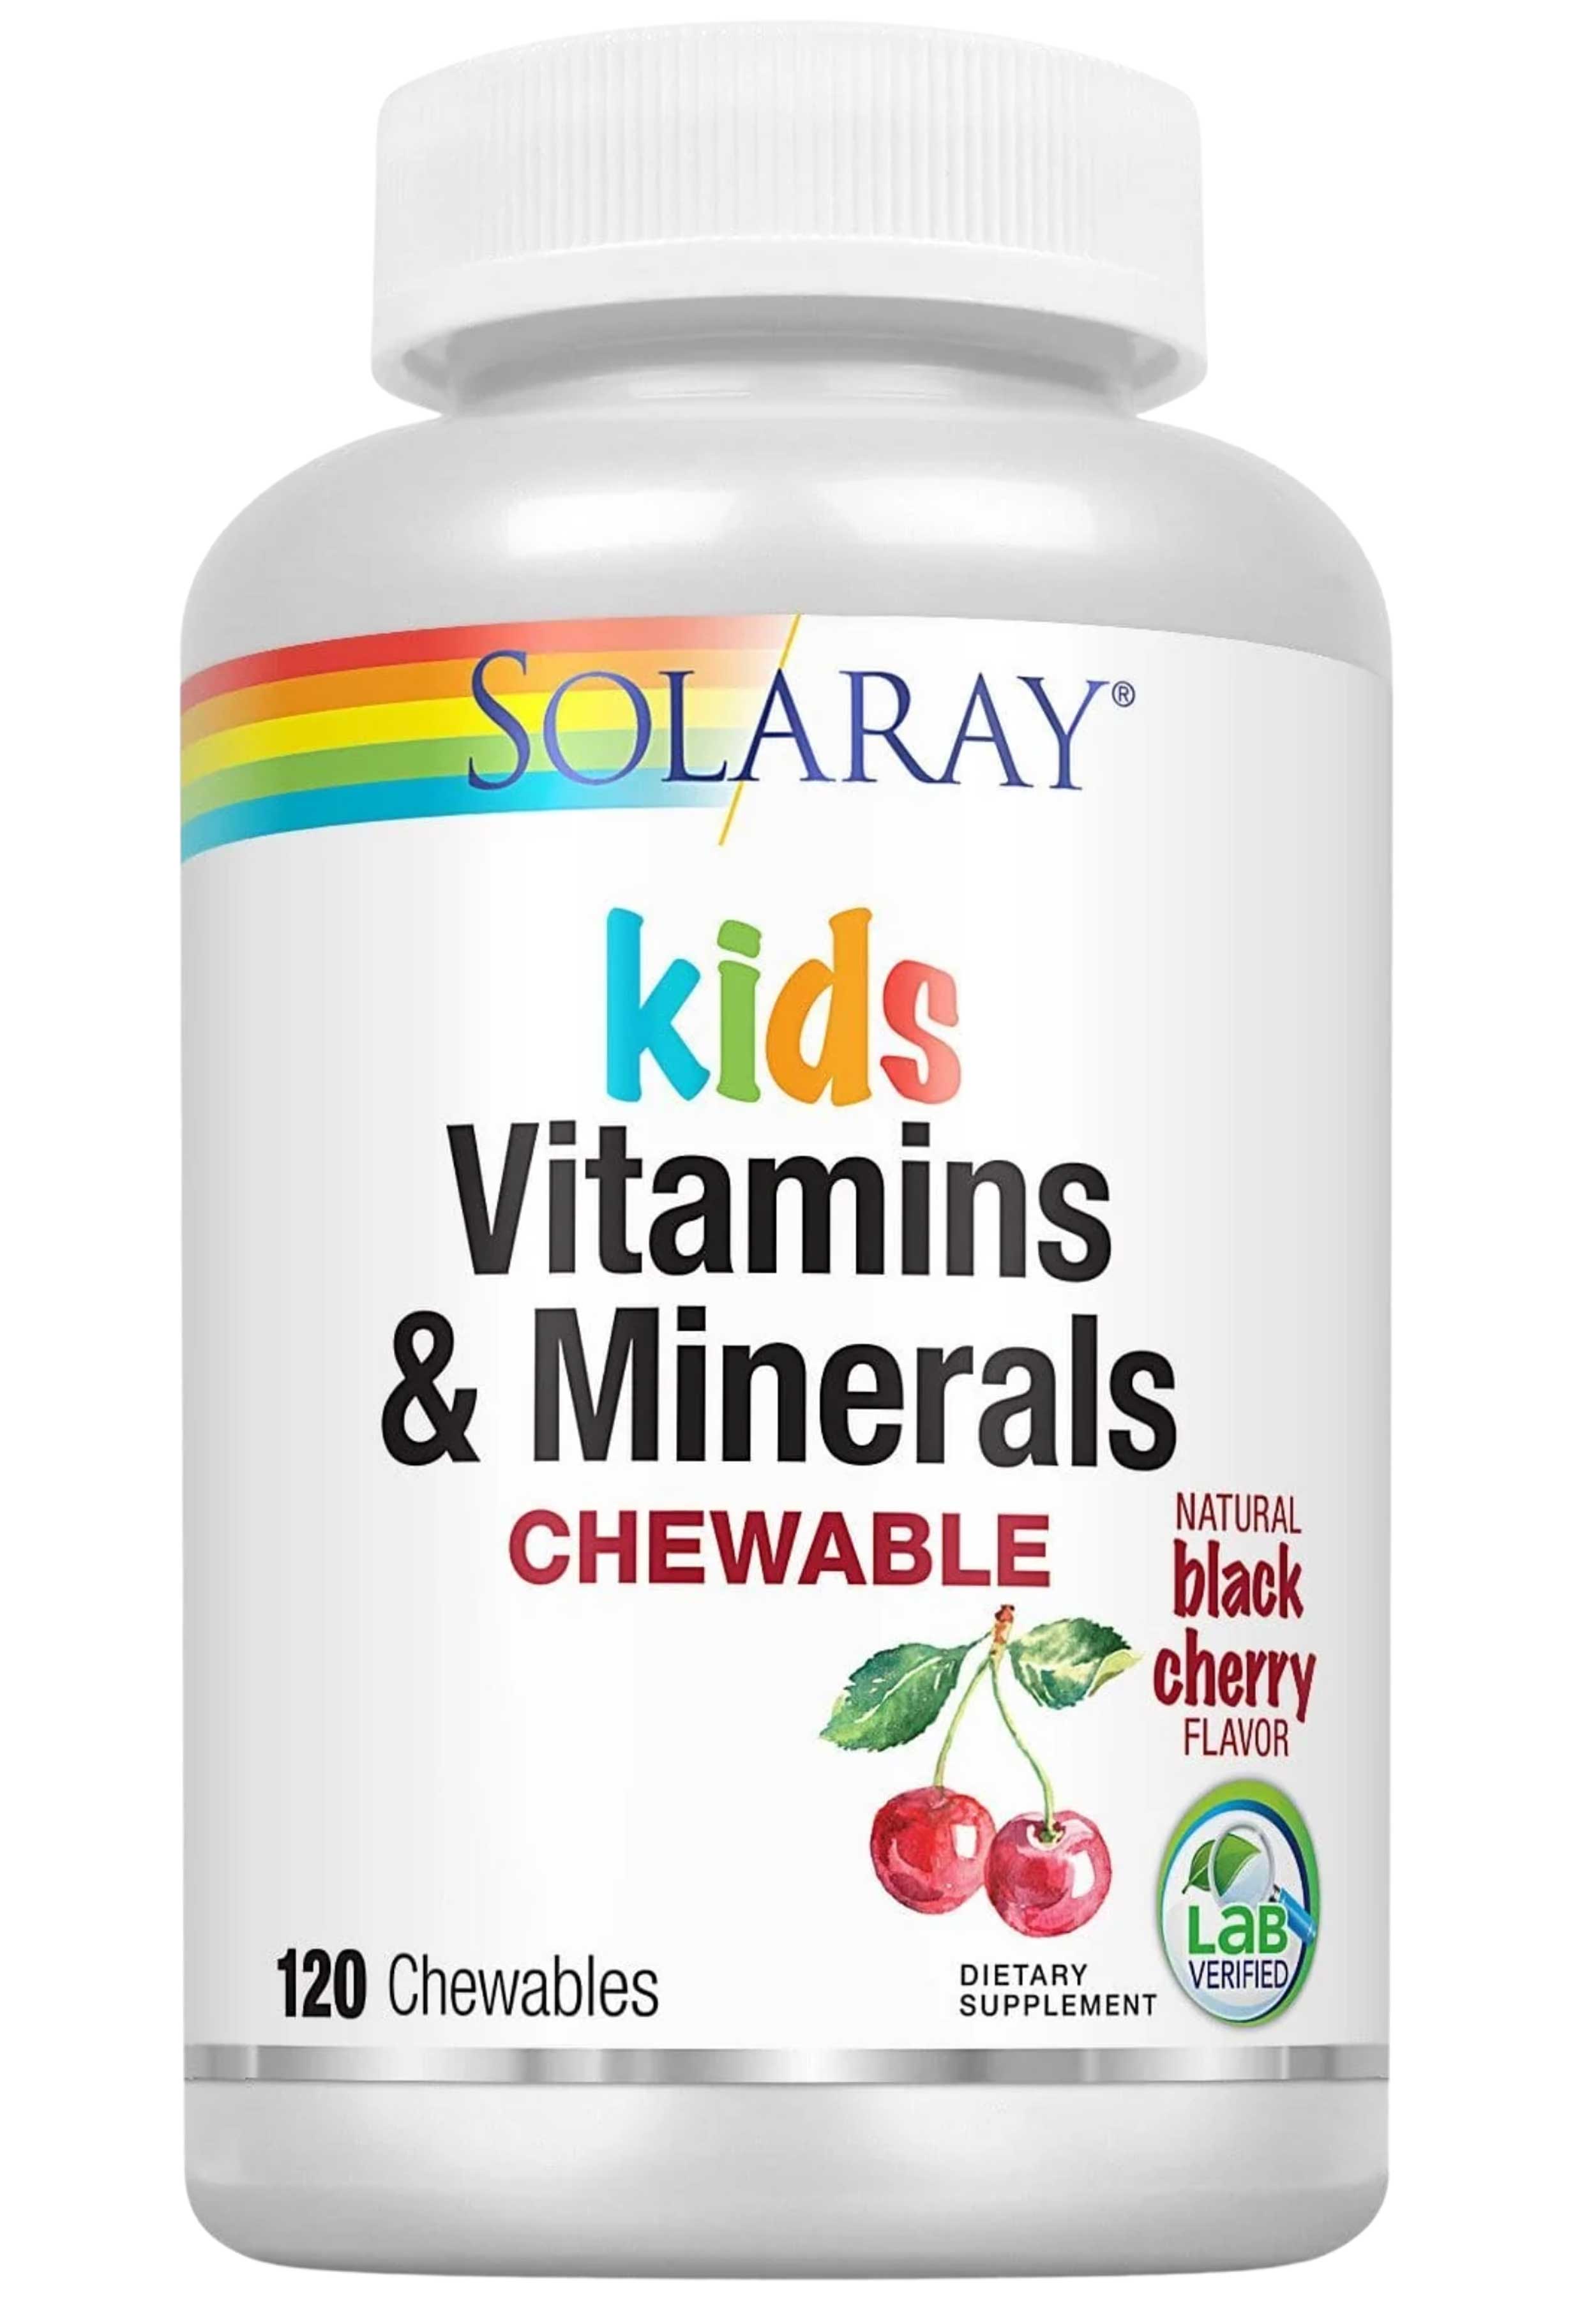 Solaray Kids Vitamins & Minerals Chewable Black Cherry